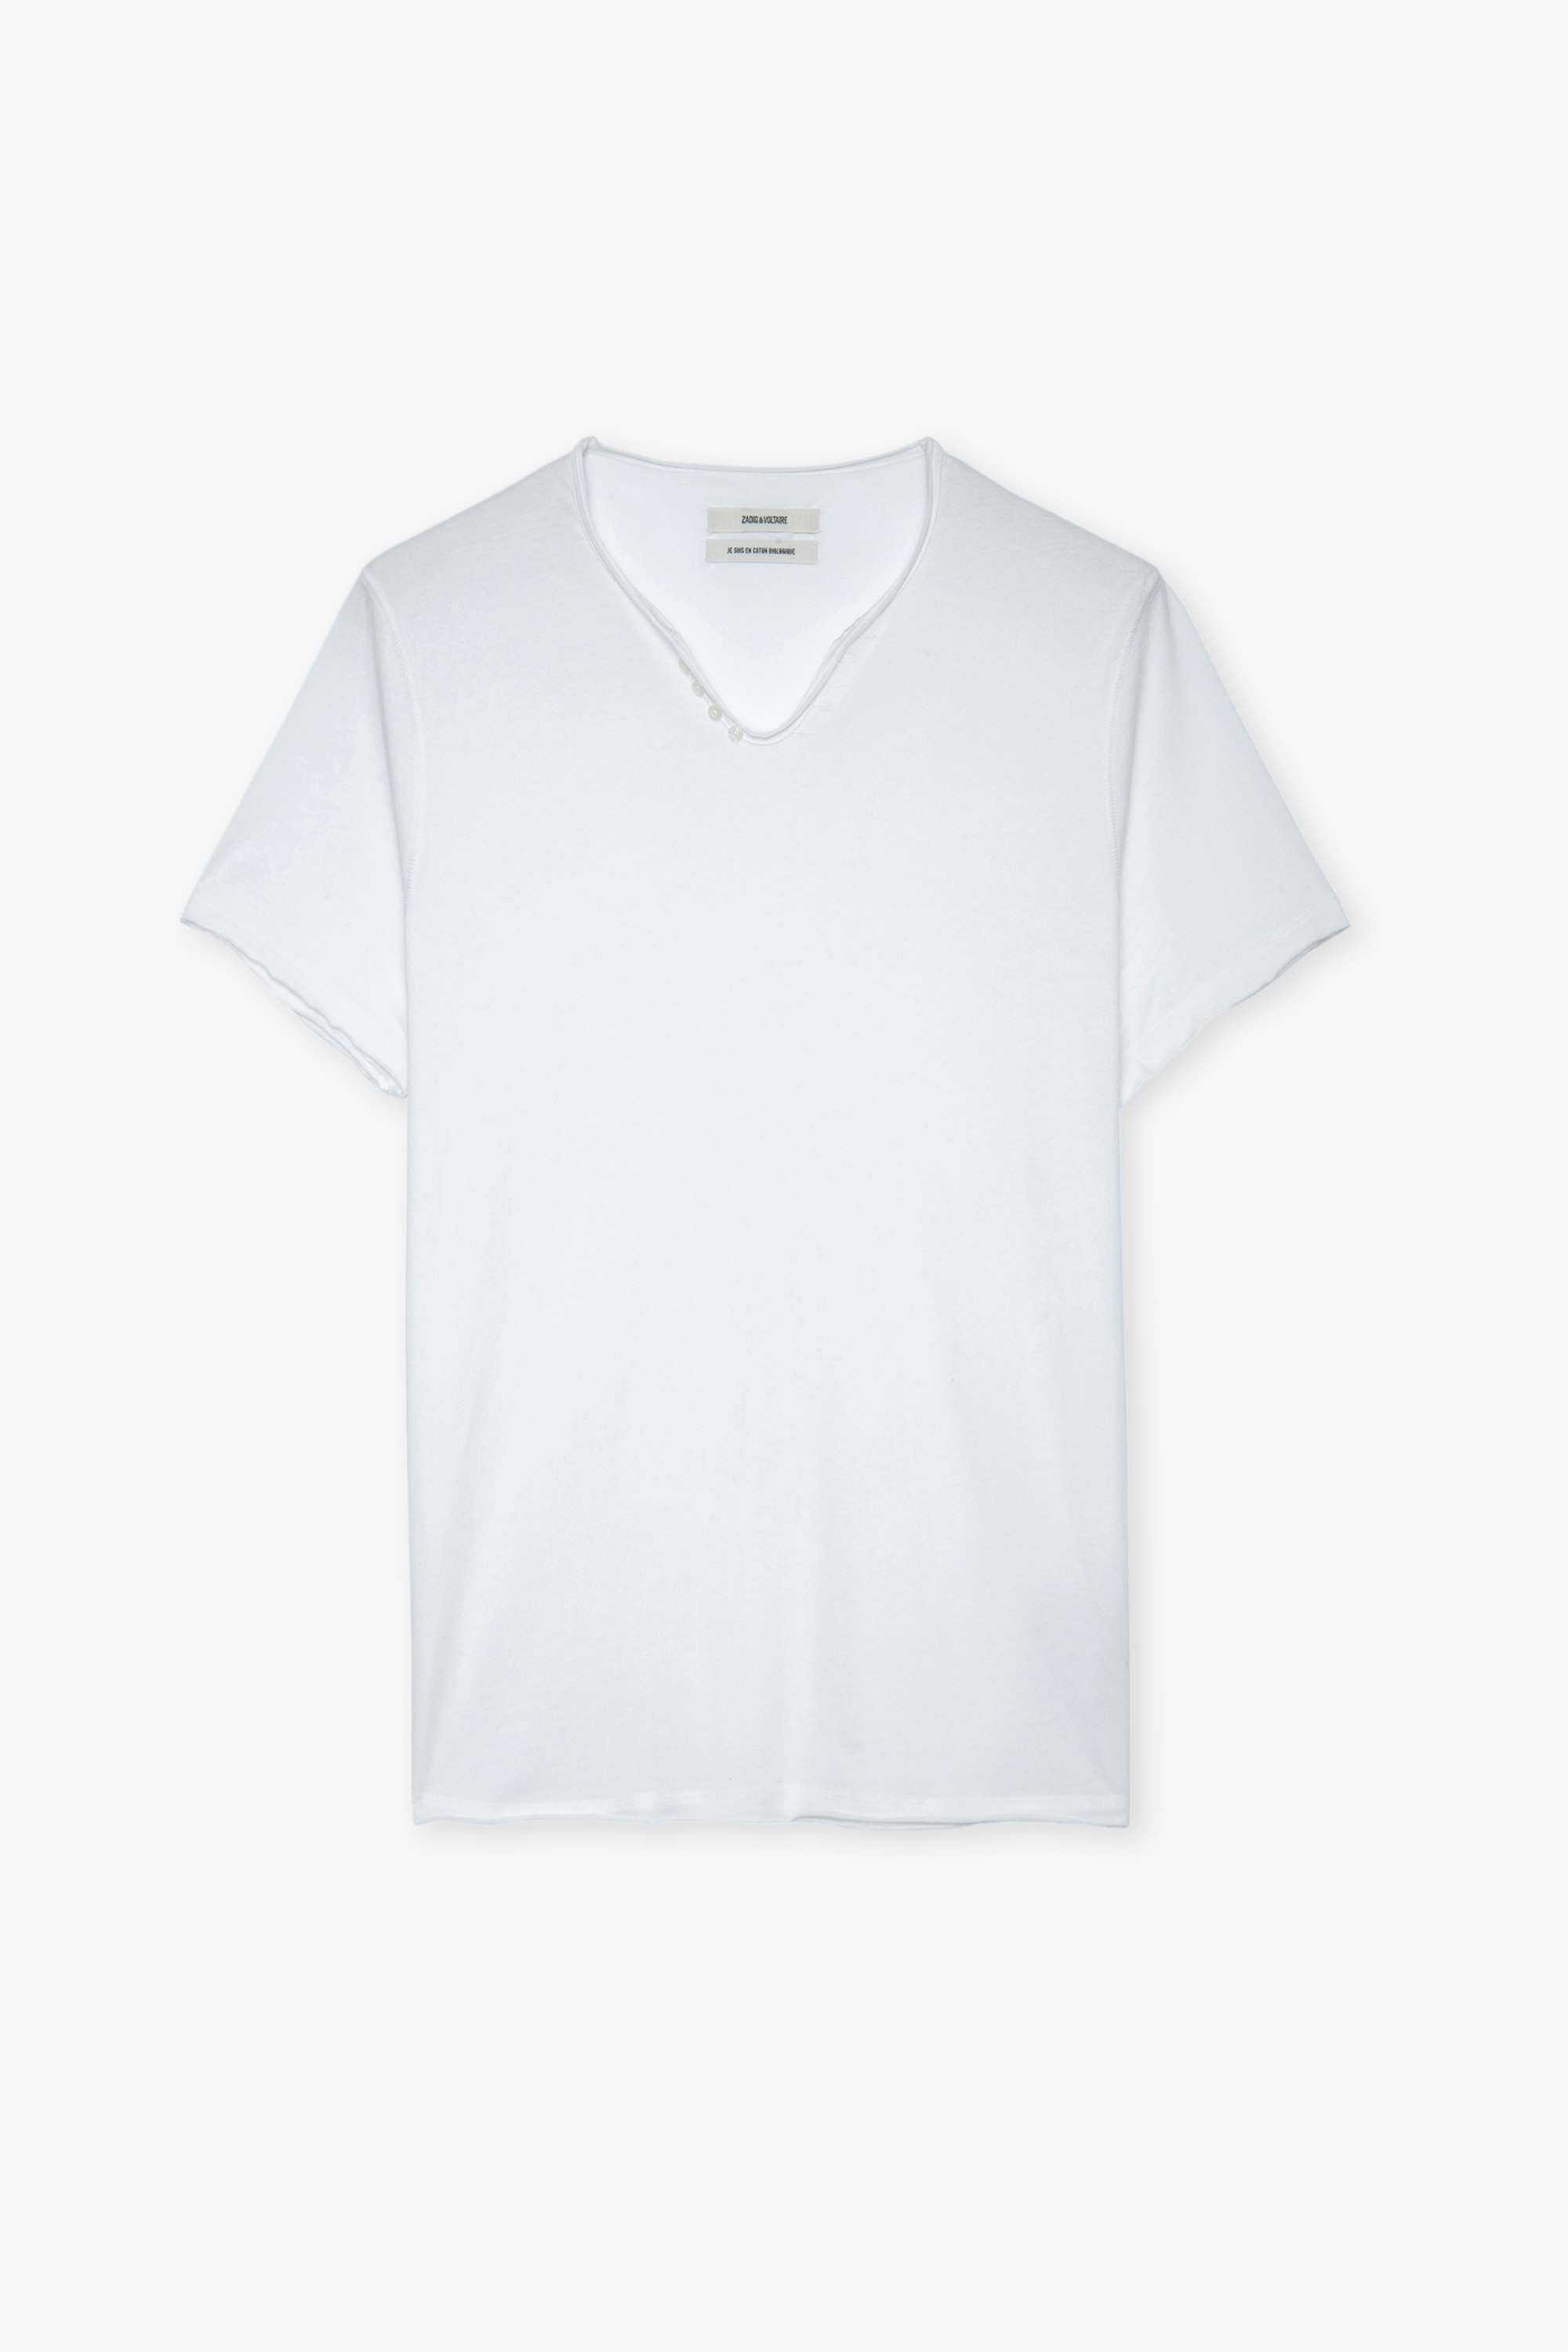 T-shirt Serafino Monastir - T-shirt bianca da uomo